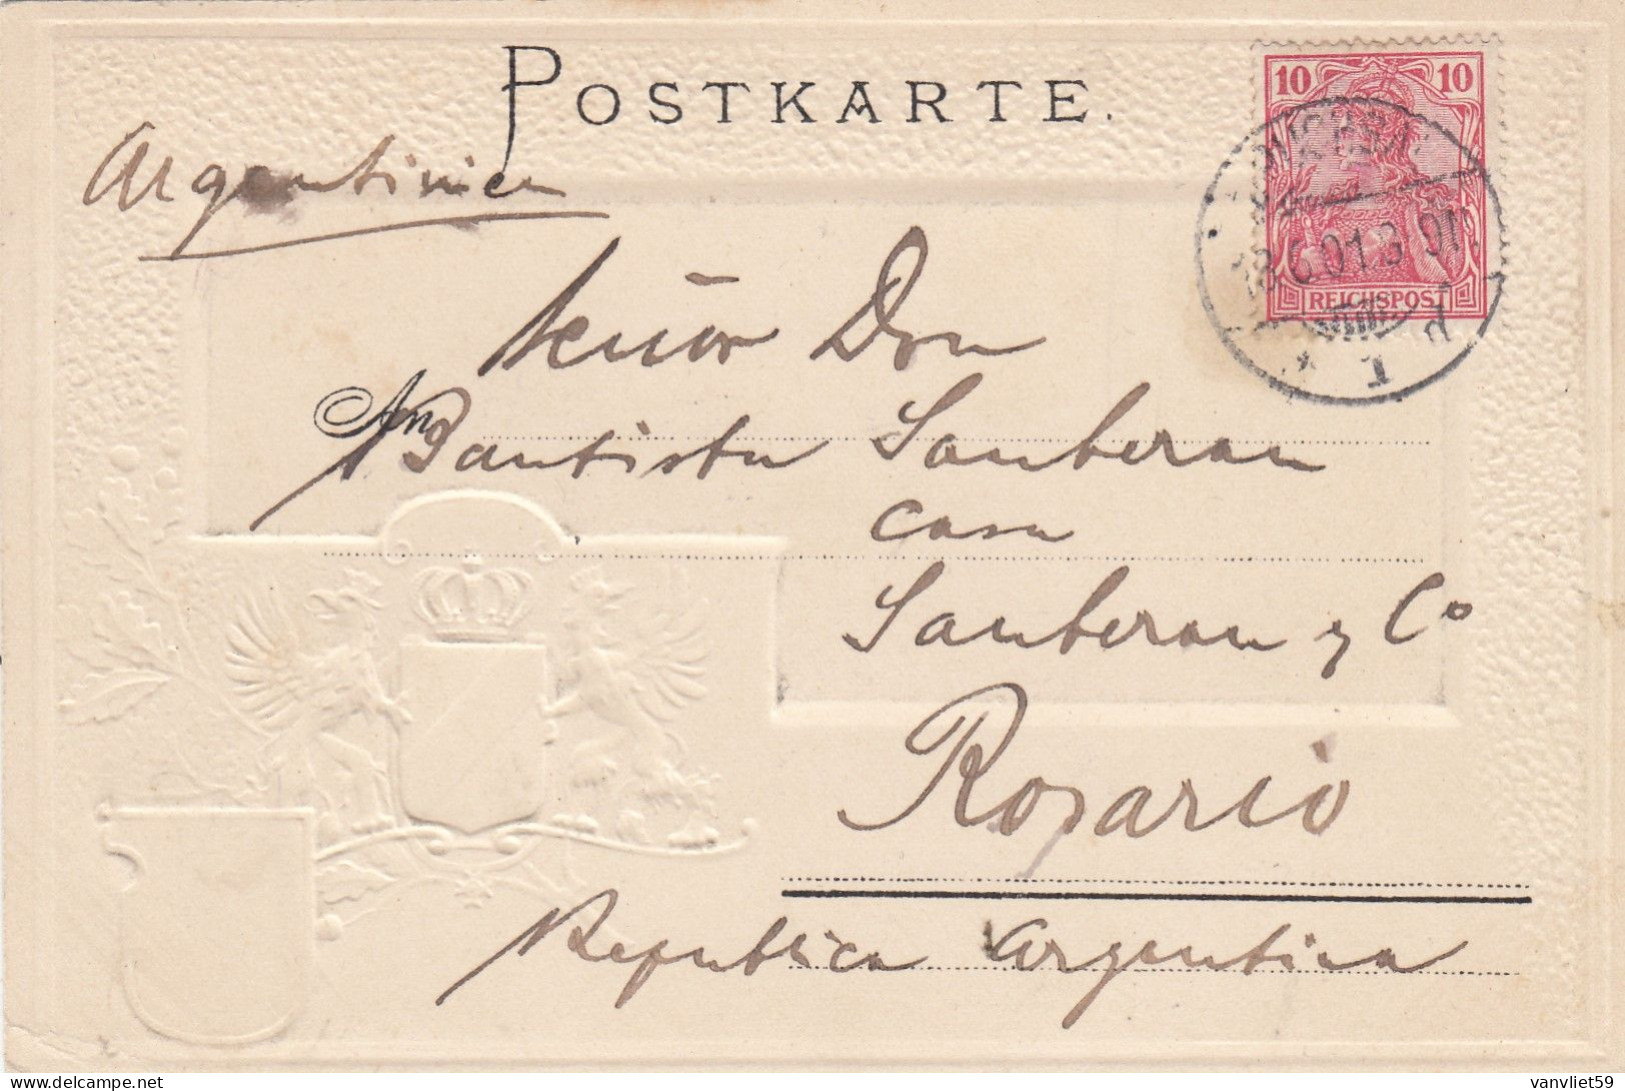 KARLSRUHE-BADEN WUTTENBERG-GERMANIA-PANORAMA - CARTOLINA IN RILIEVO  VIAGGIATA  IL 13-01-1901 - Karlsruhe